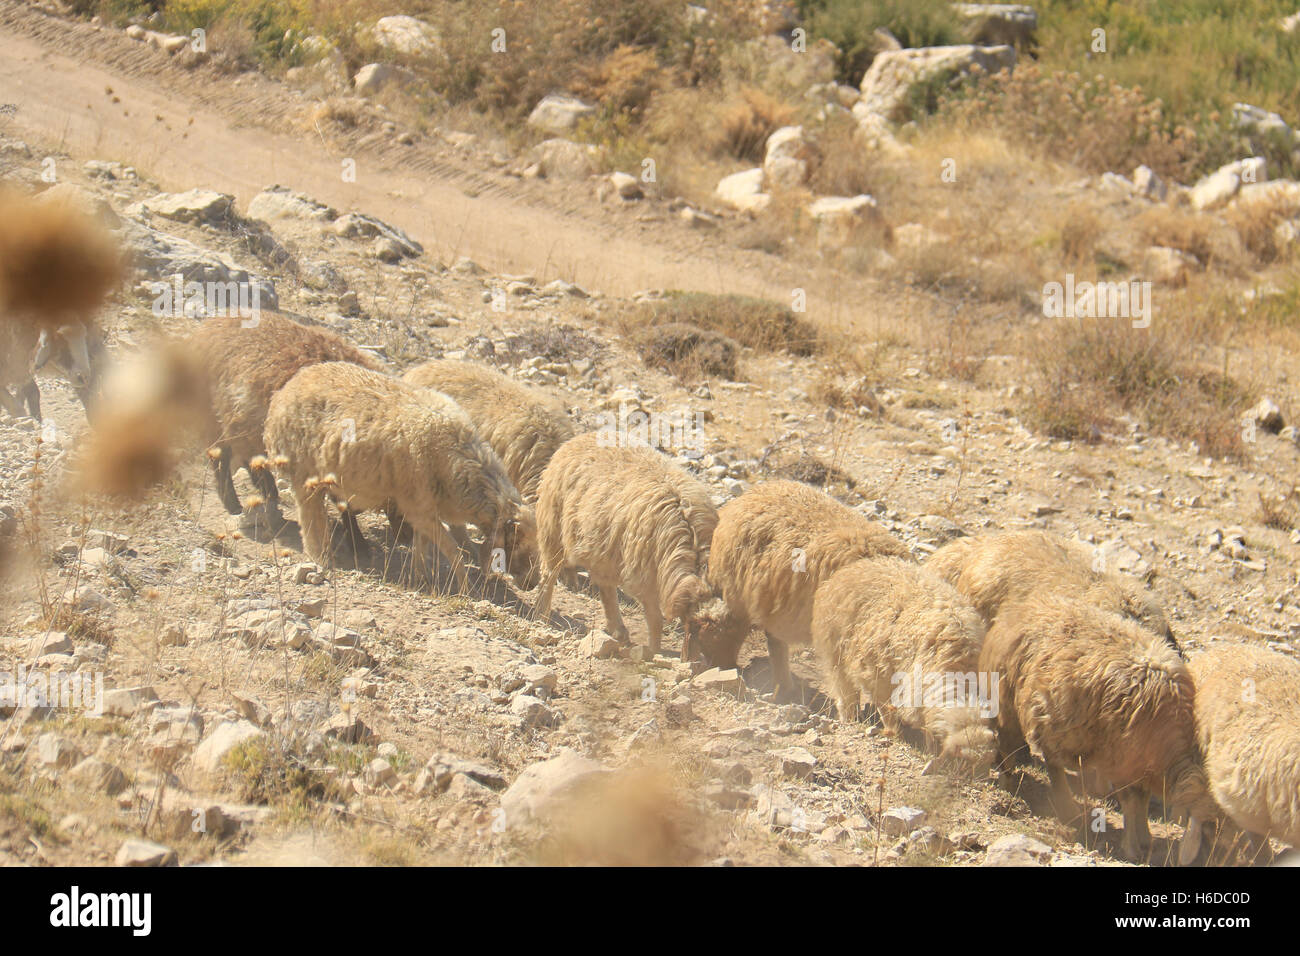 A sheep herd walking in line. Stock Photo